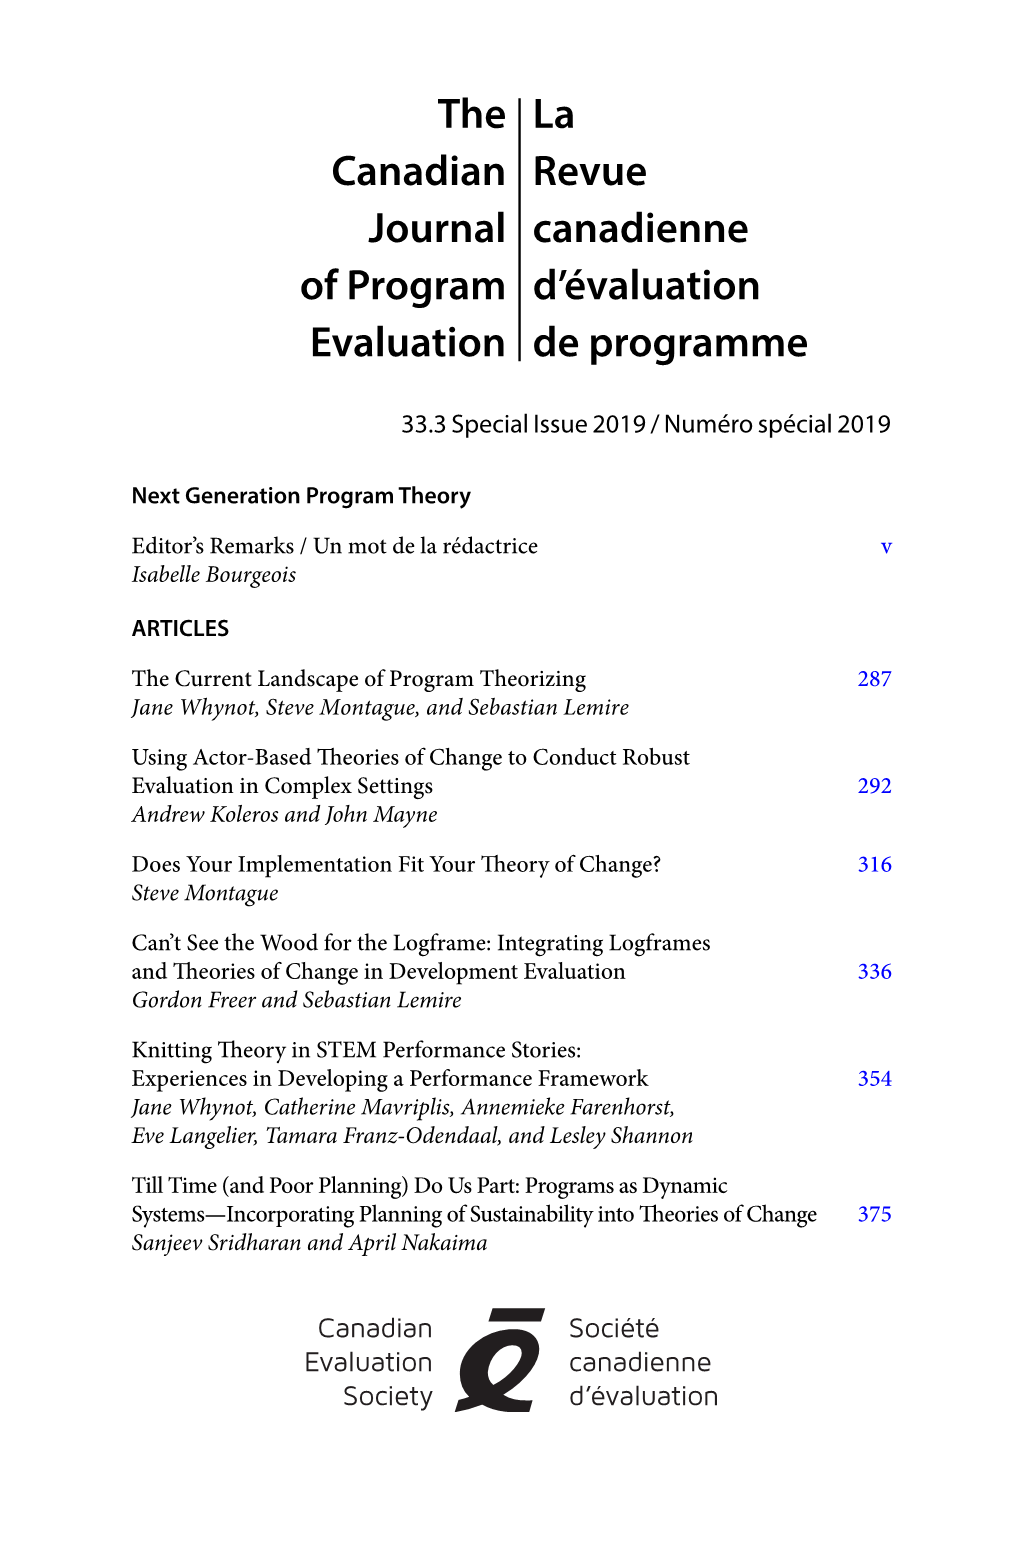 Canadian Journal of Program Evaluation